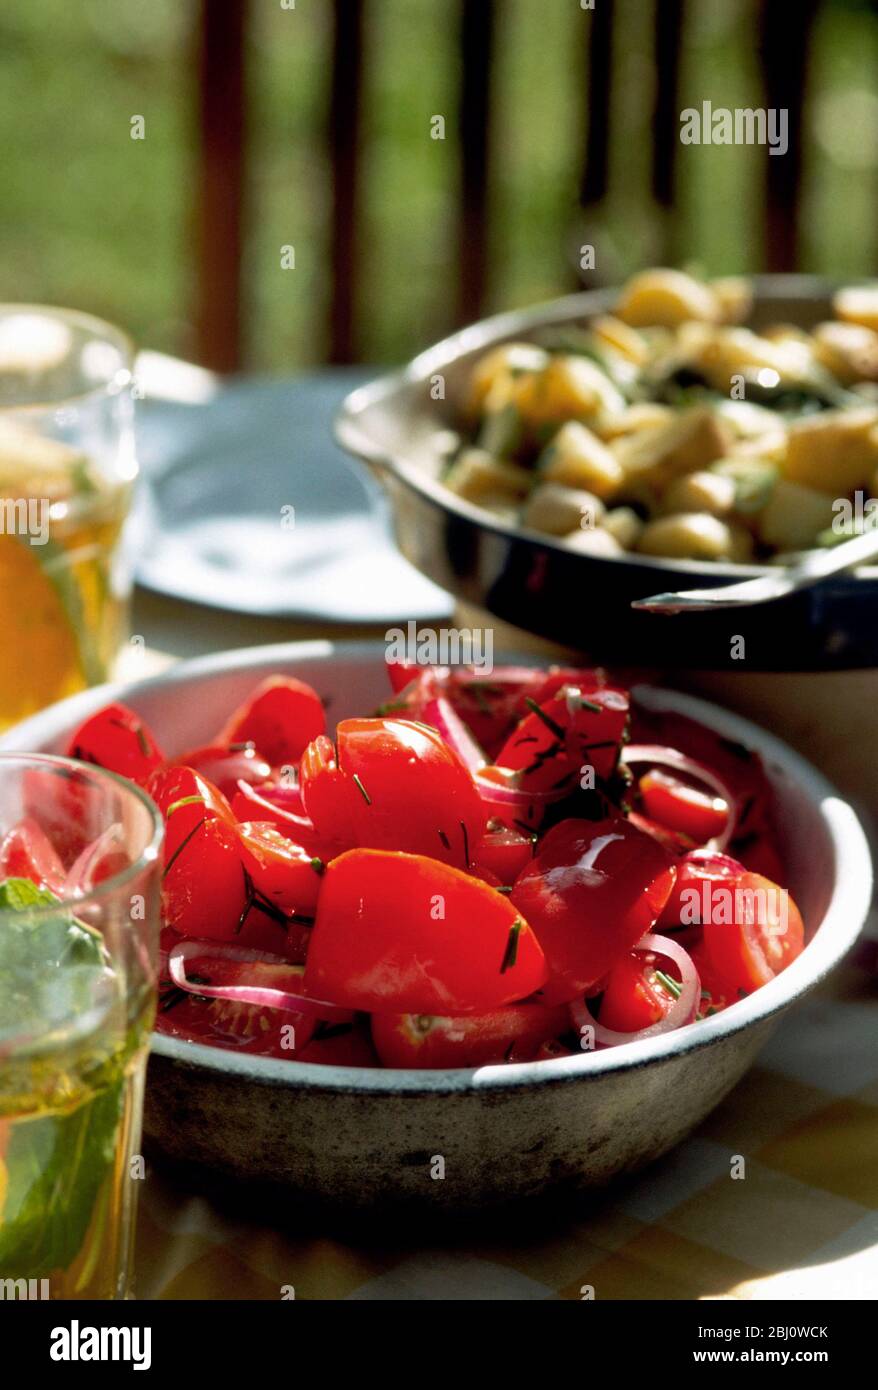 Alte Metallschüssel Tomatensalat mit weichem Fokus Kartoffelsalat dahinter - Stockfoto